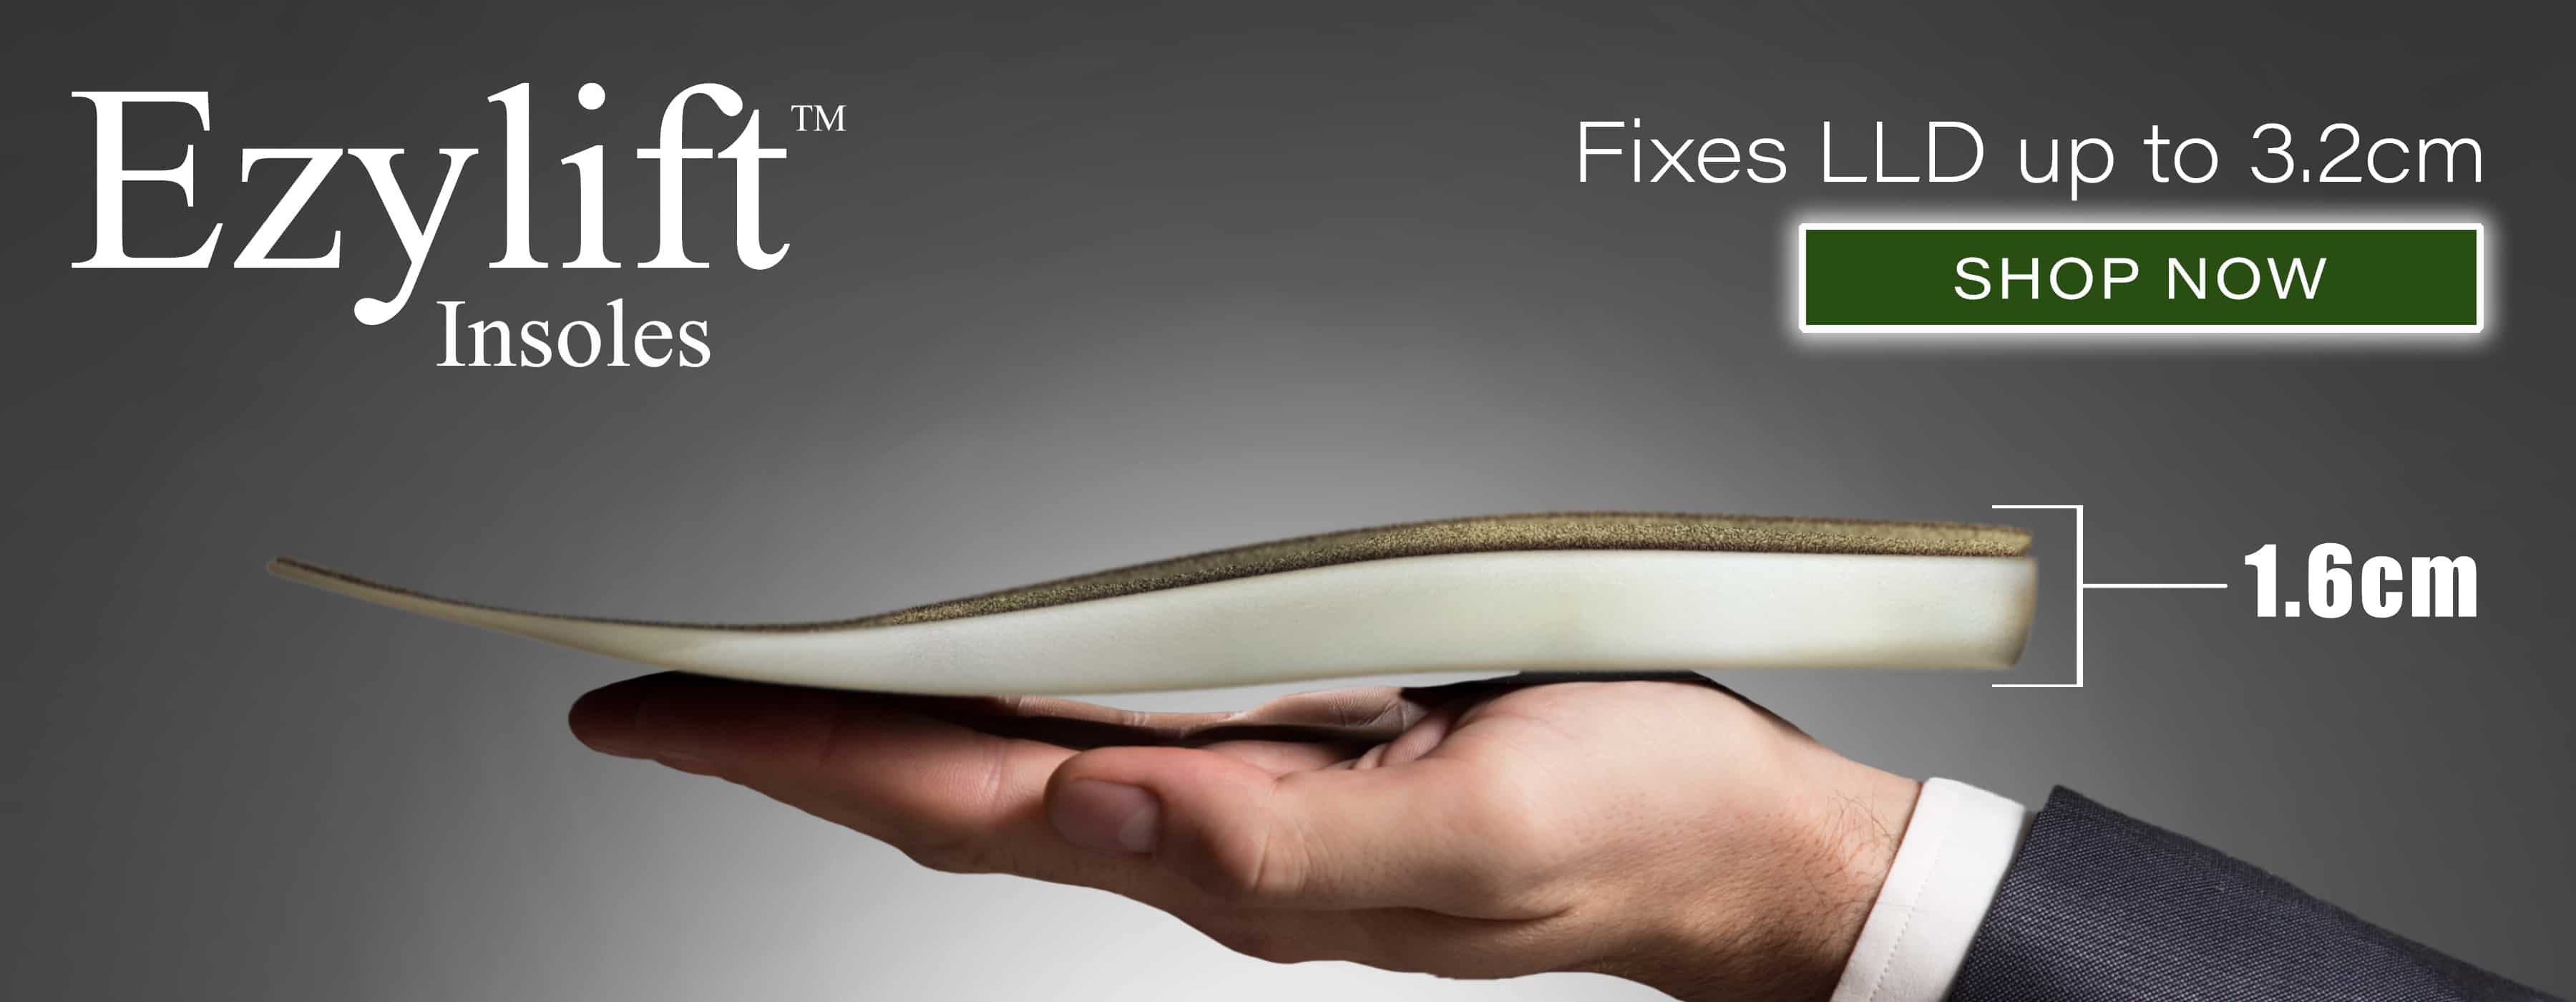 Ezylift Insoles | Fixes LLD up to 3.2cm | JENNEN shoes